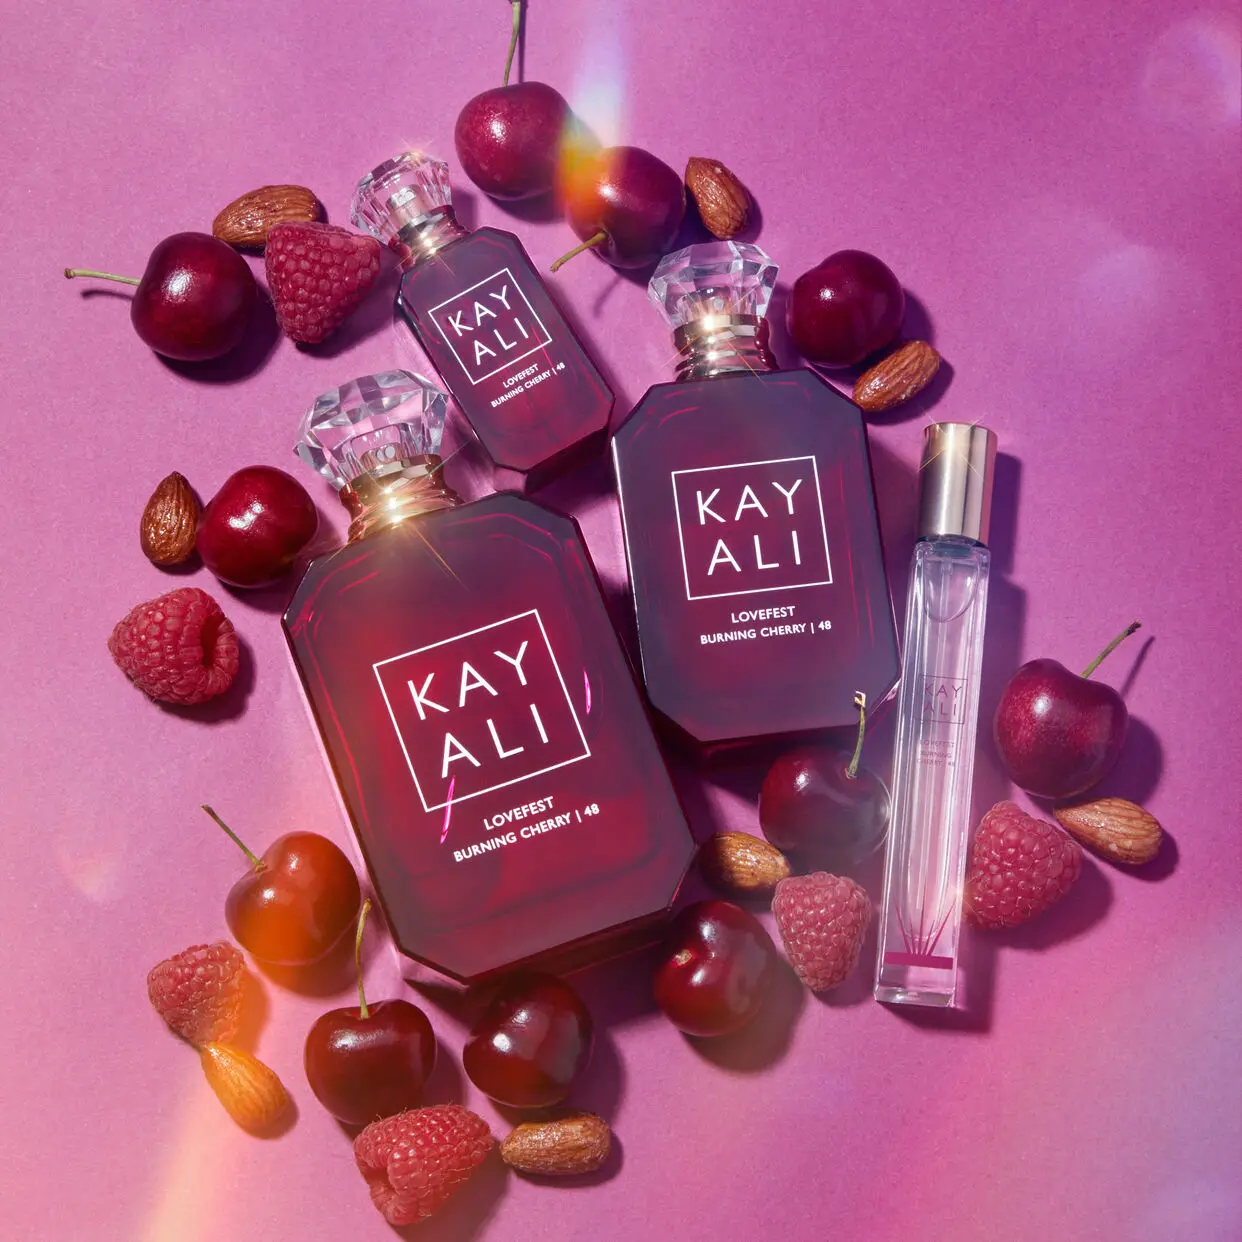 Kayali Lovefest Burning Cherry | 48
The Best Vegan and Cruelty Free Perfumes